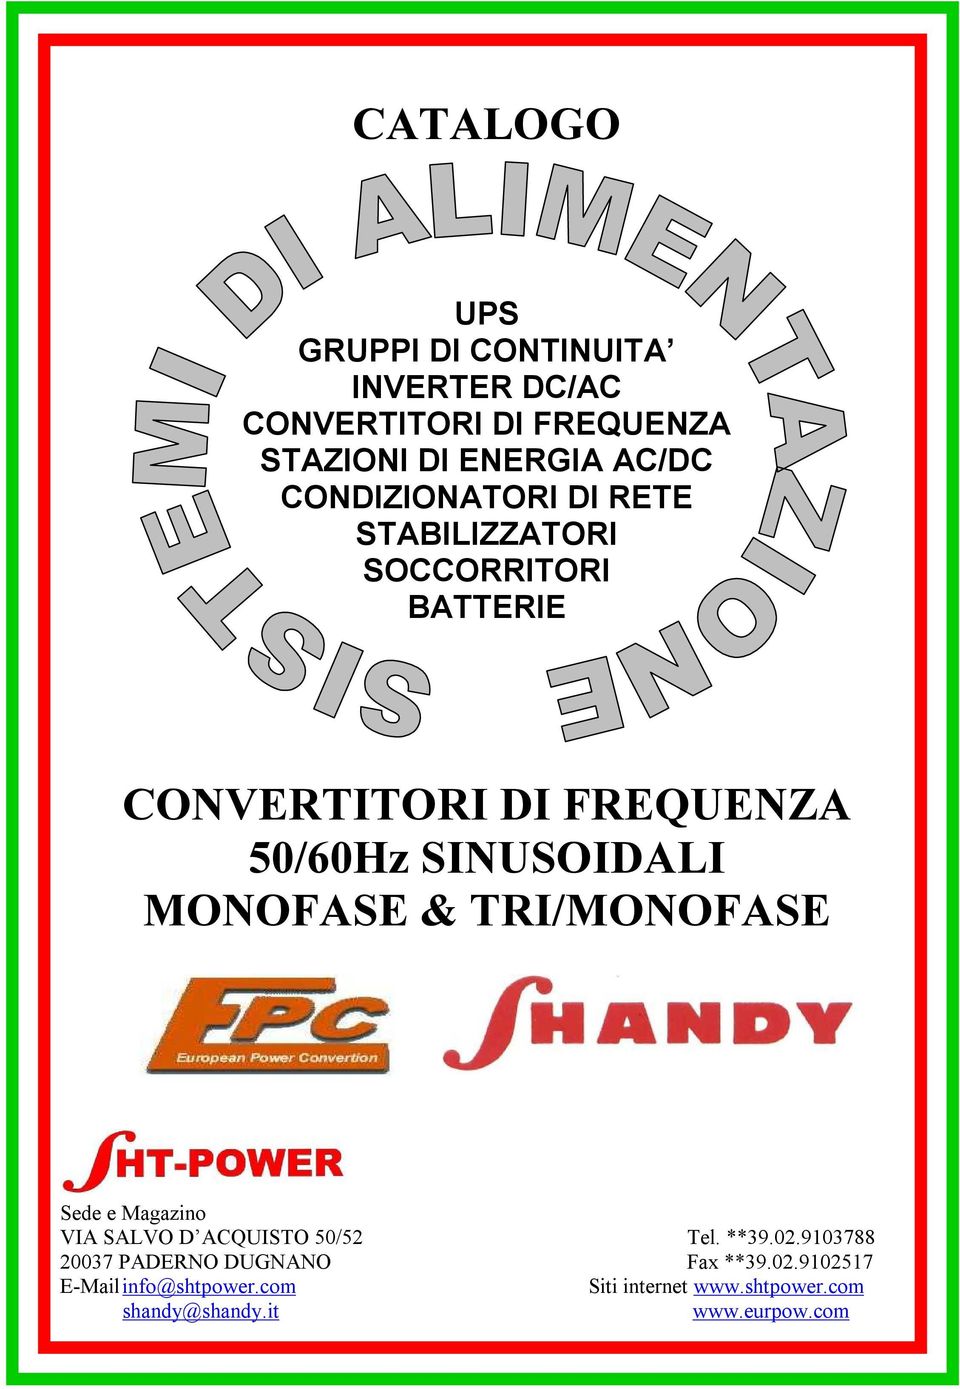 MONOFASE & TRI/MONOFASE Sede e Magazino VIA SALVO D ACQUISTO 50/52 Tel. **39.02.